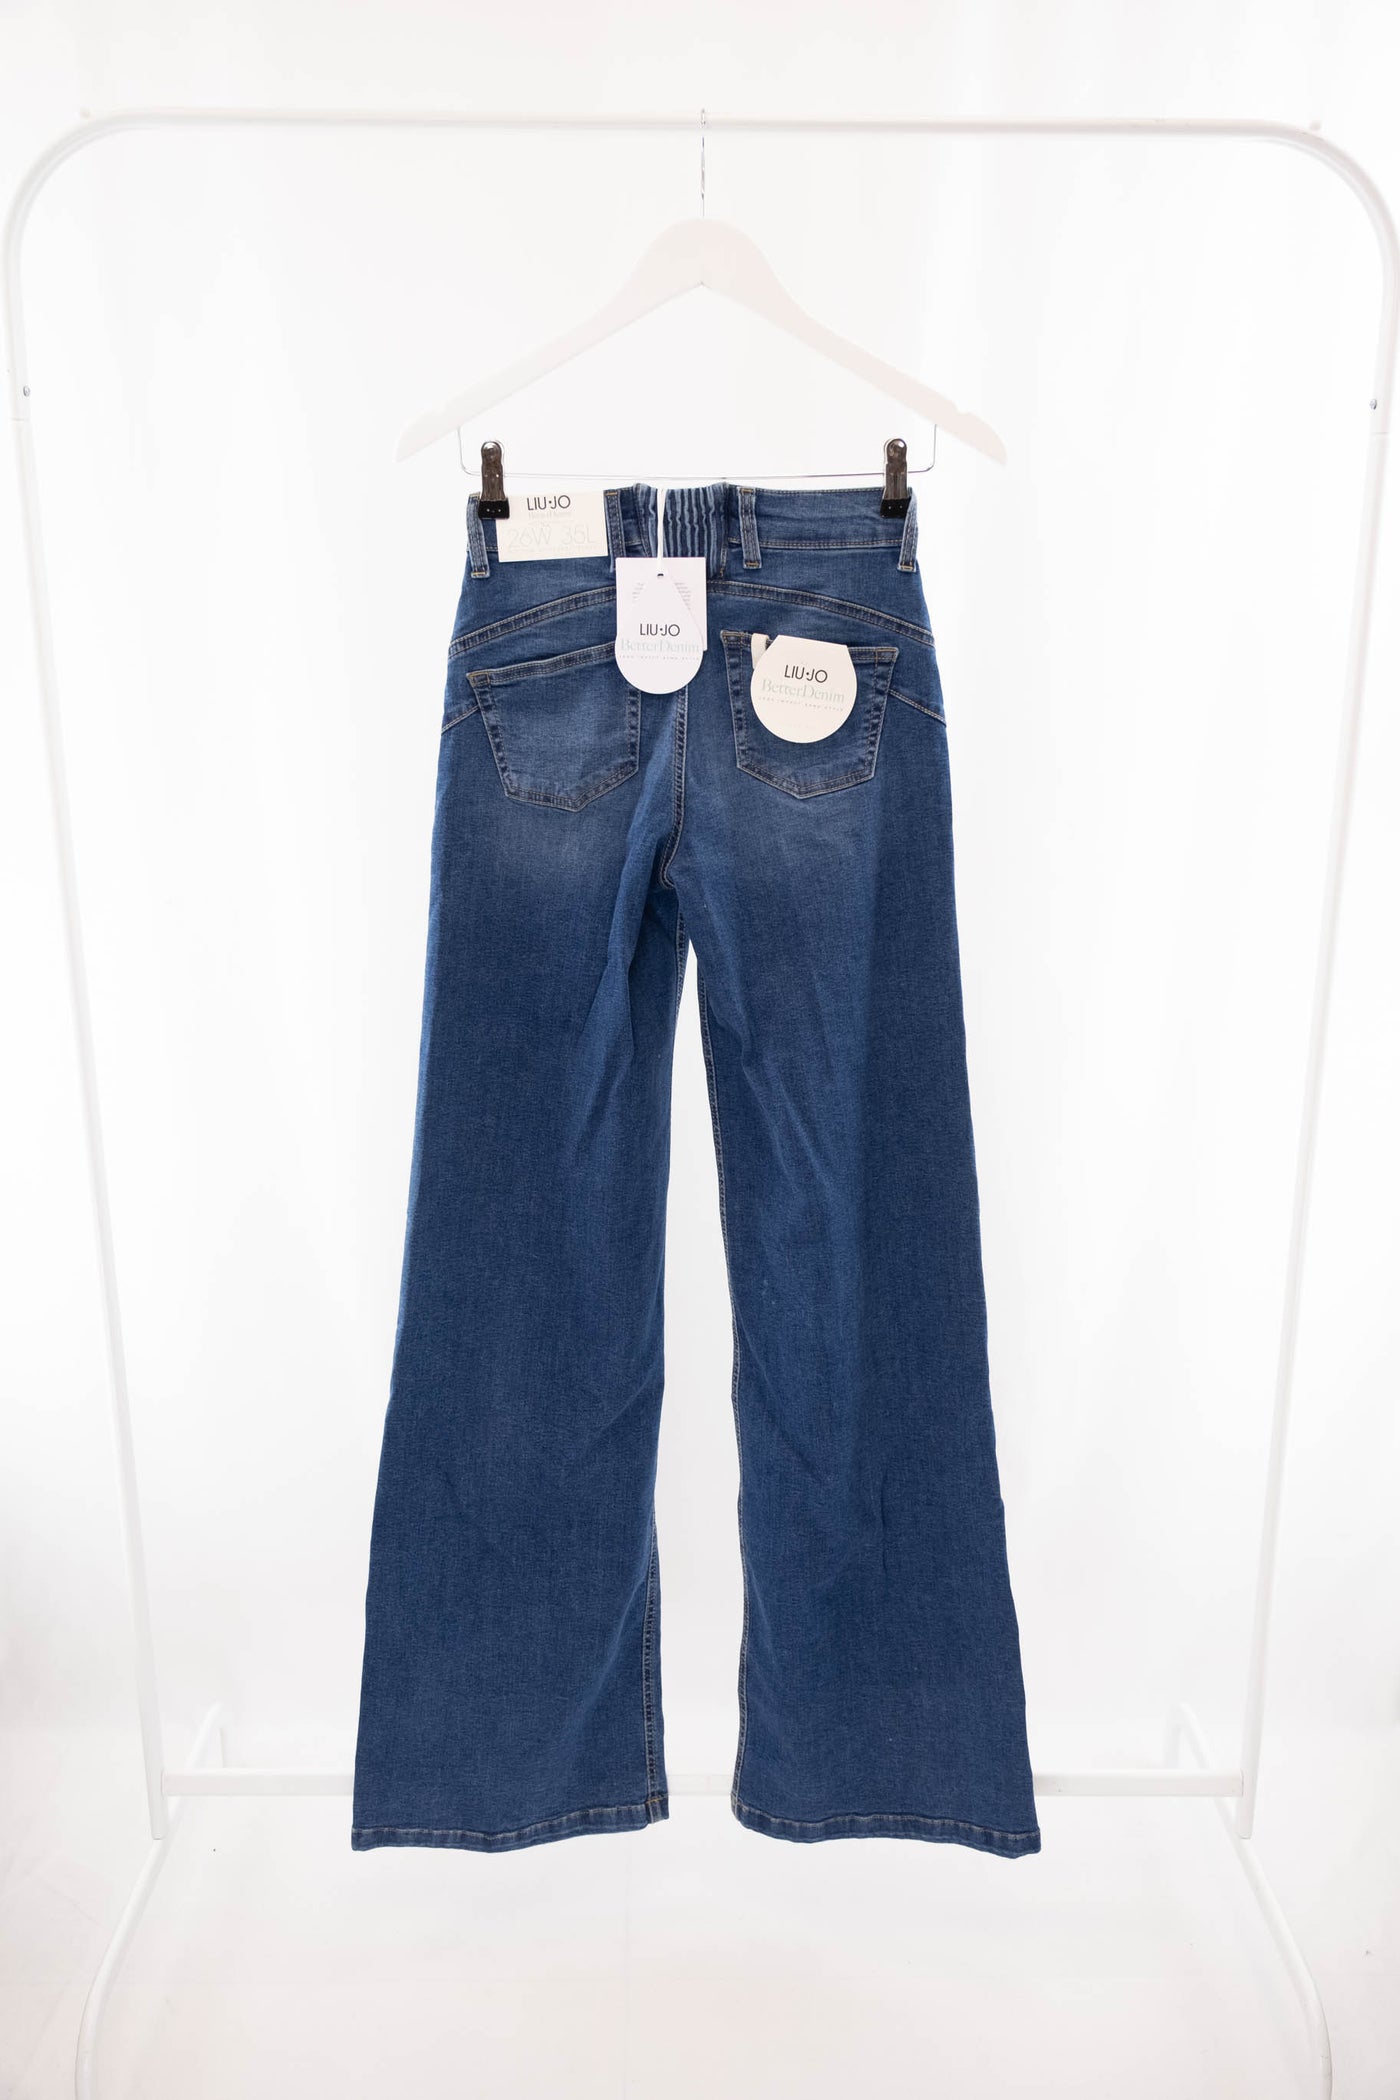 Jeans azul  (NUEVO)